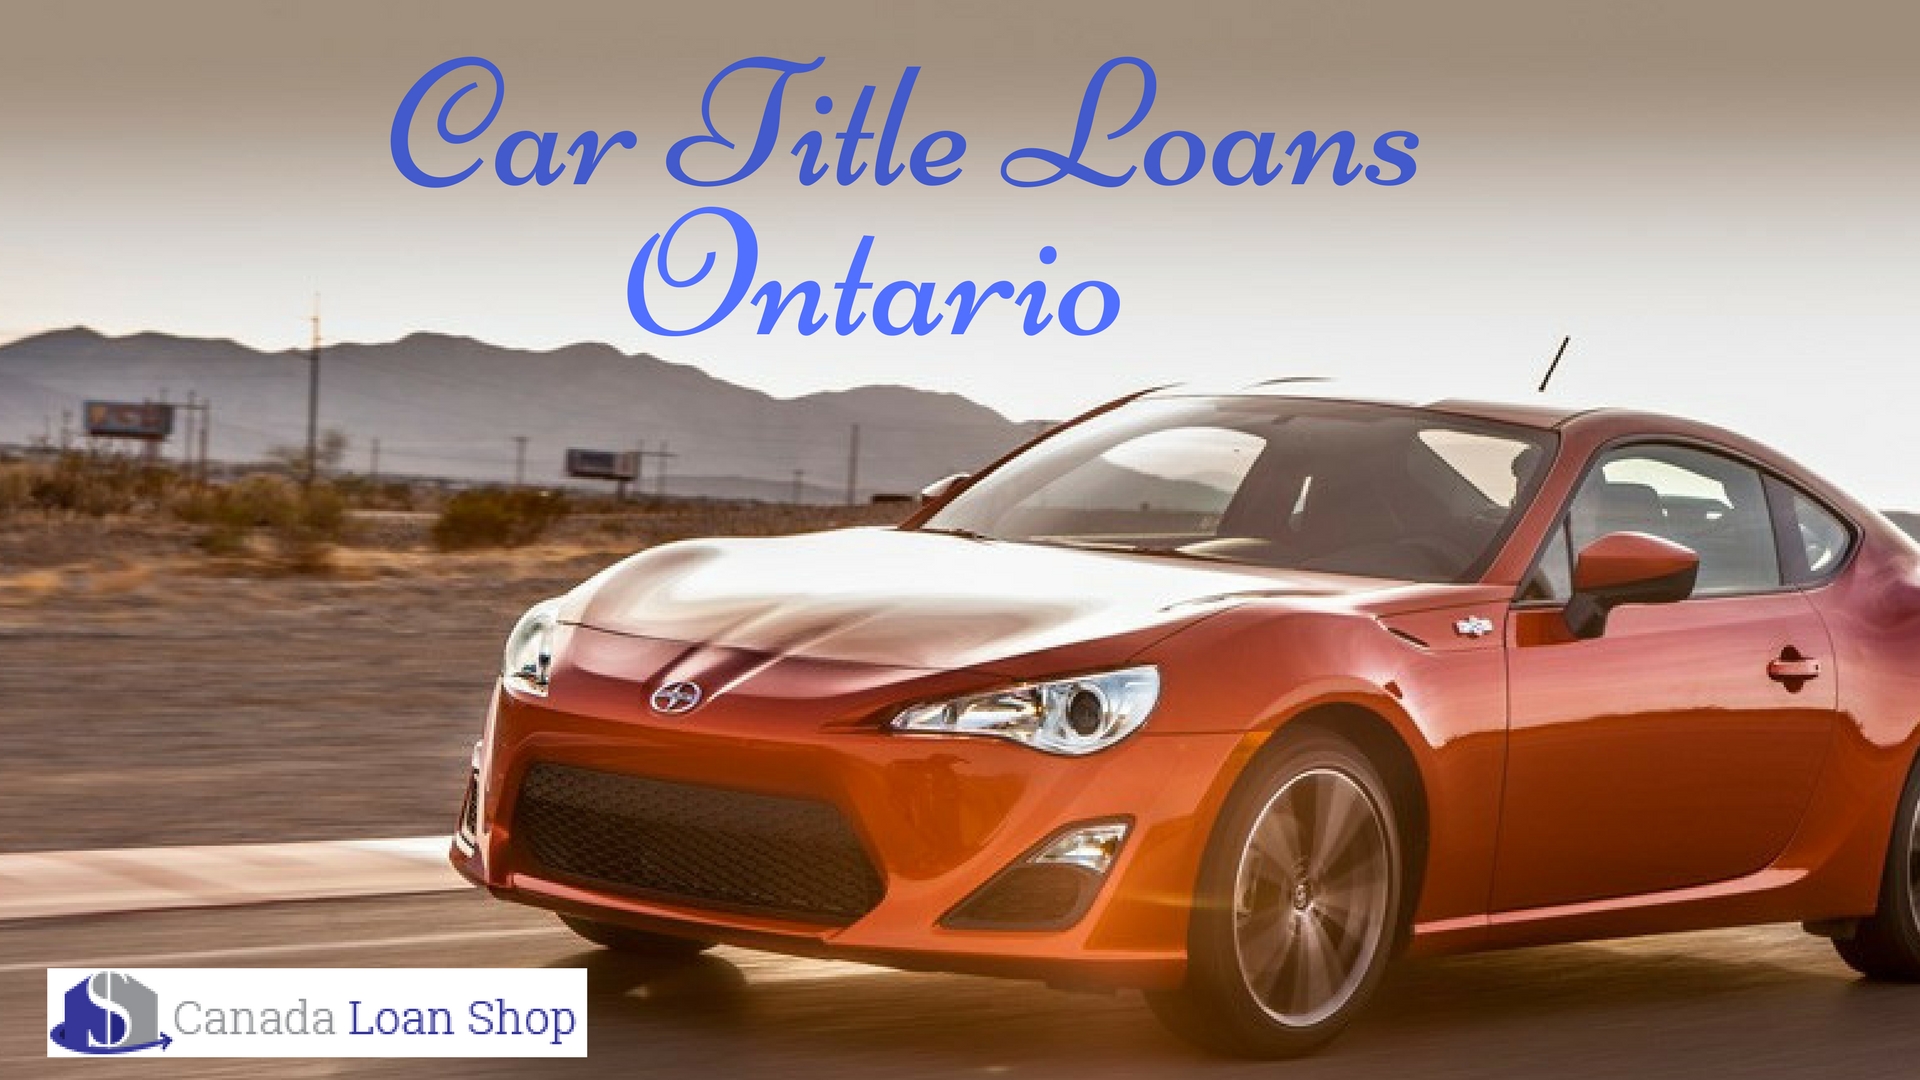 Car Title Loans Ontario